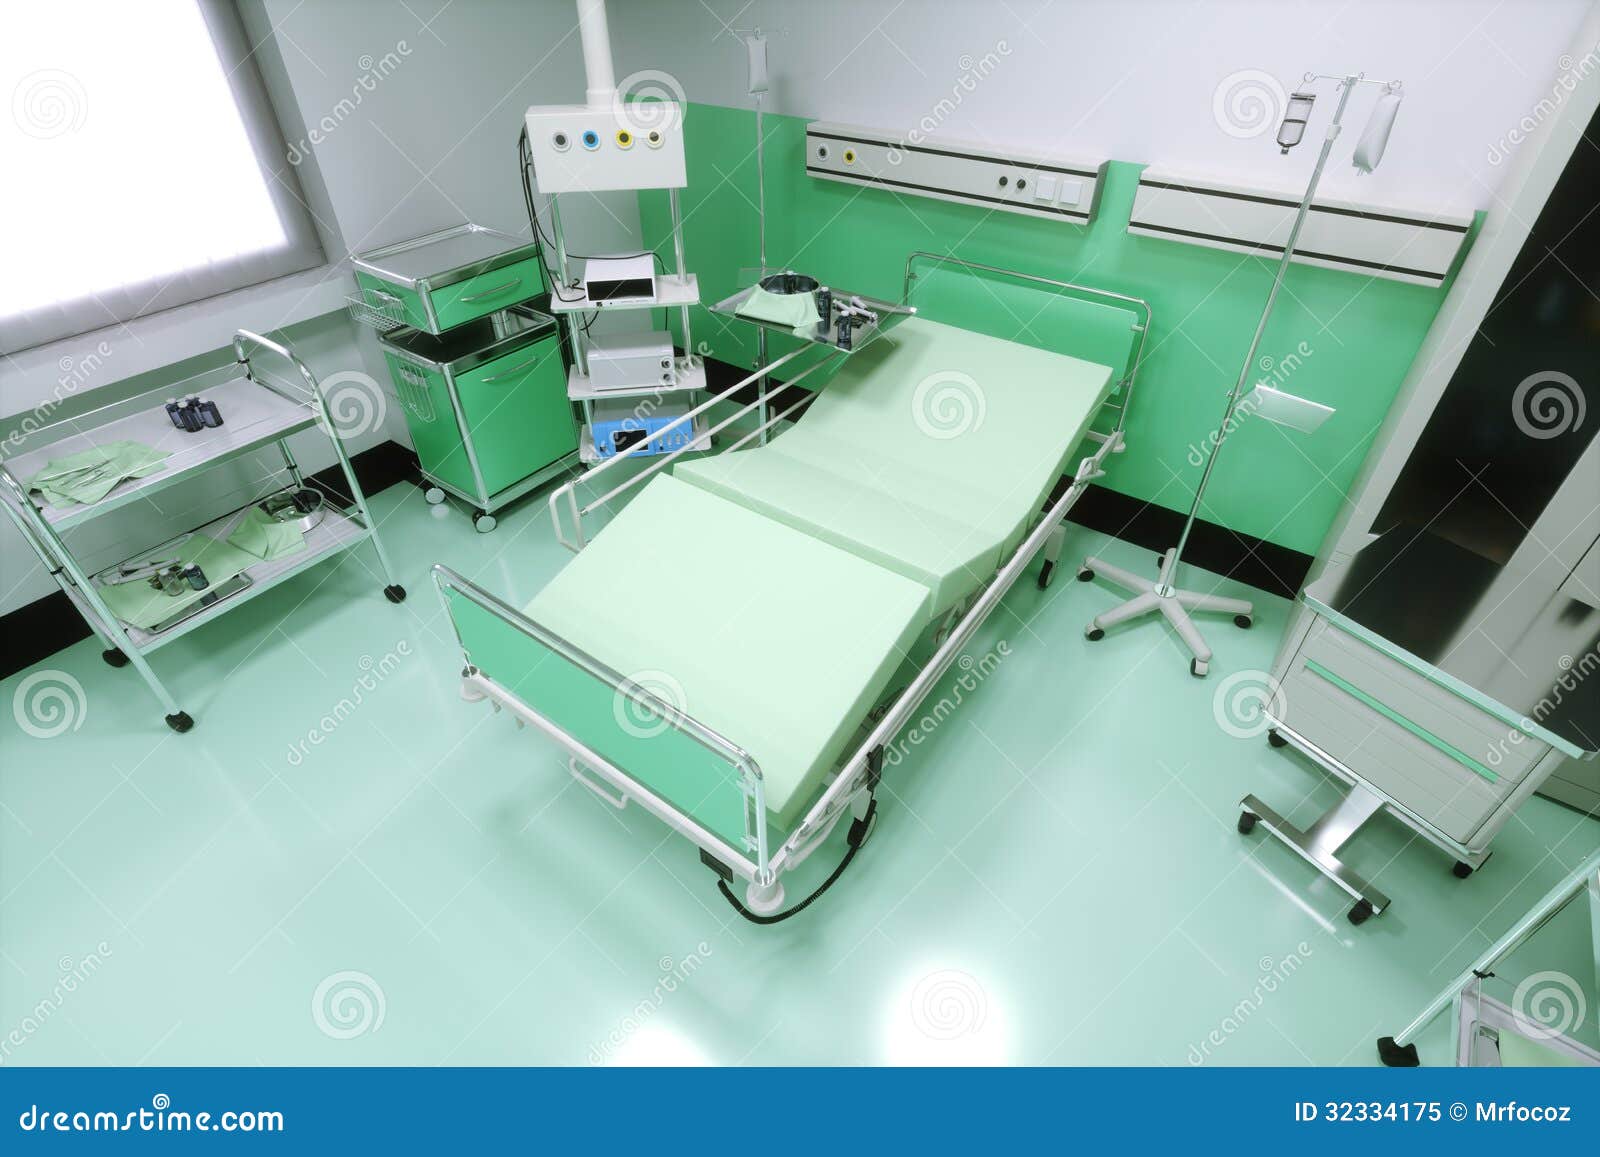 Empty Bed In A Hospital Room Stock Illustration - Illustration of ...